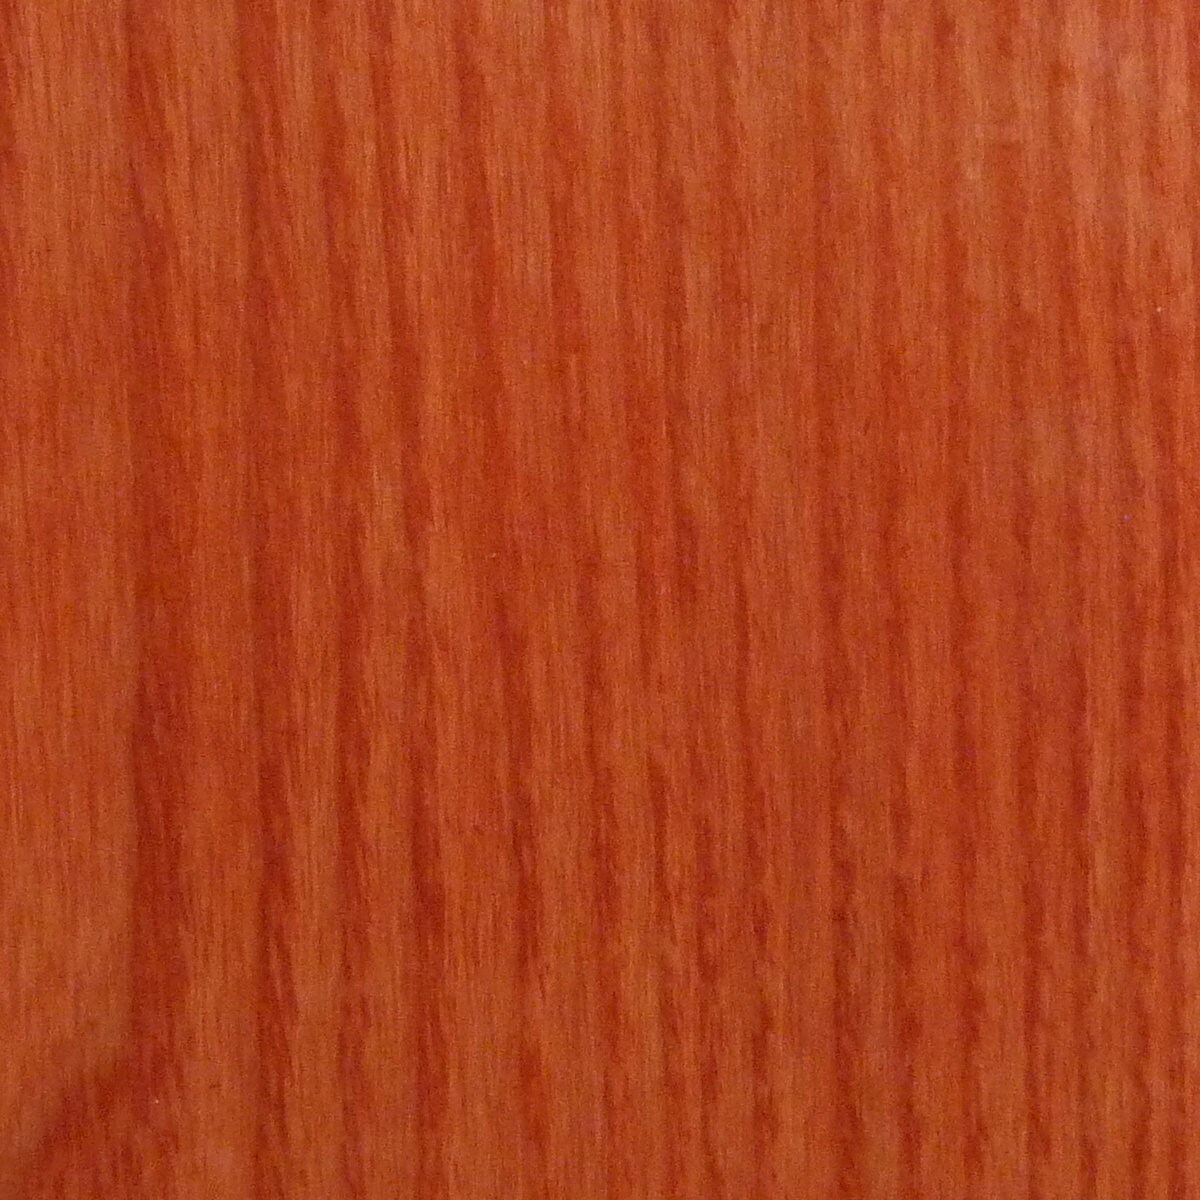 dartfords Brown Mahogany Interior Spirit Based Wood Dye 230ml Bottle